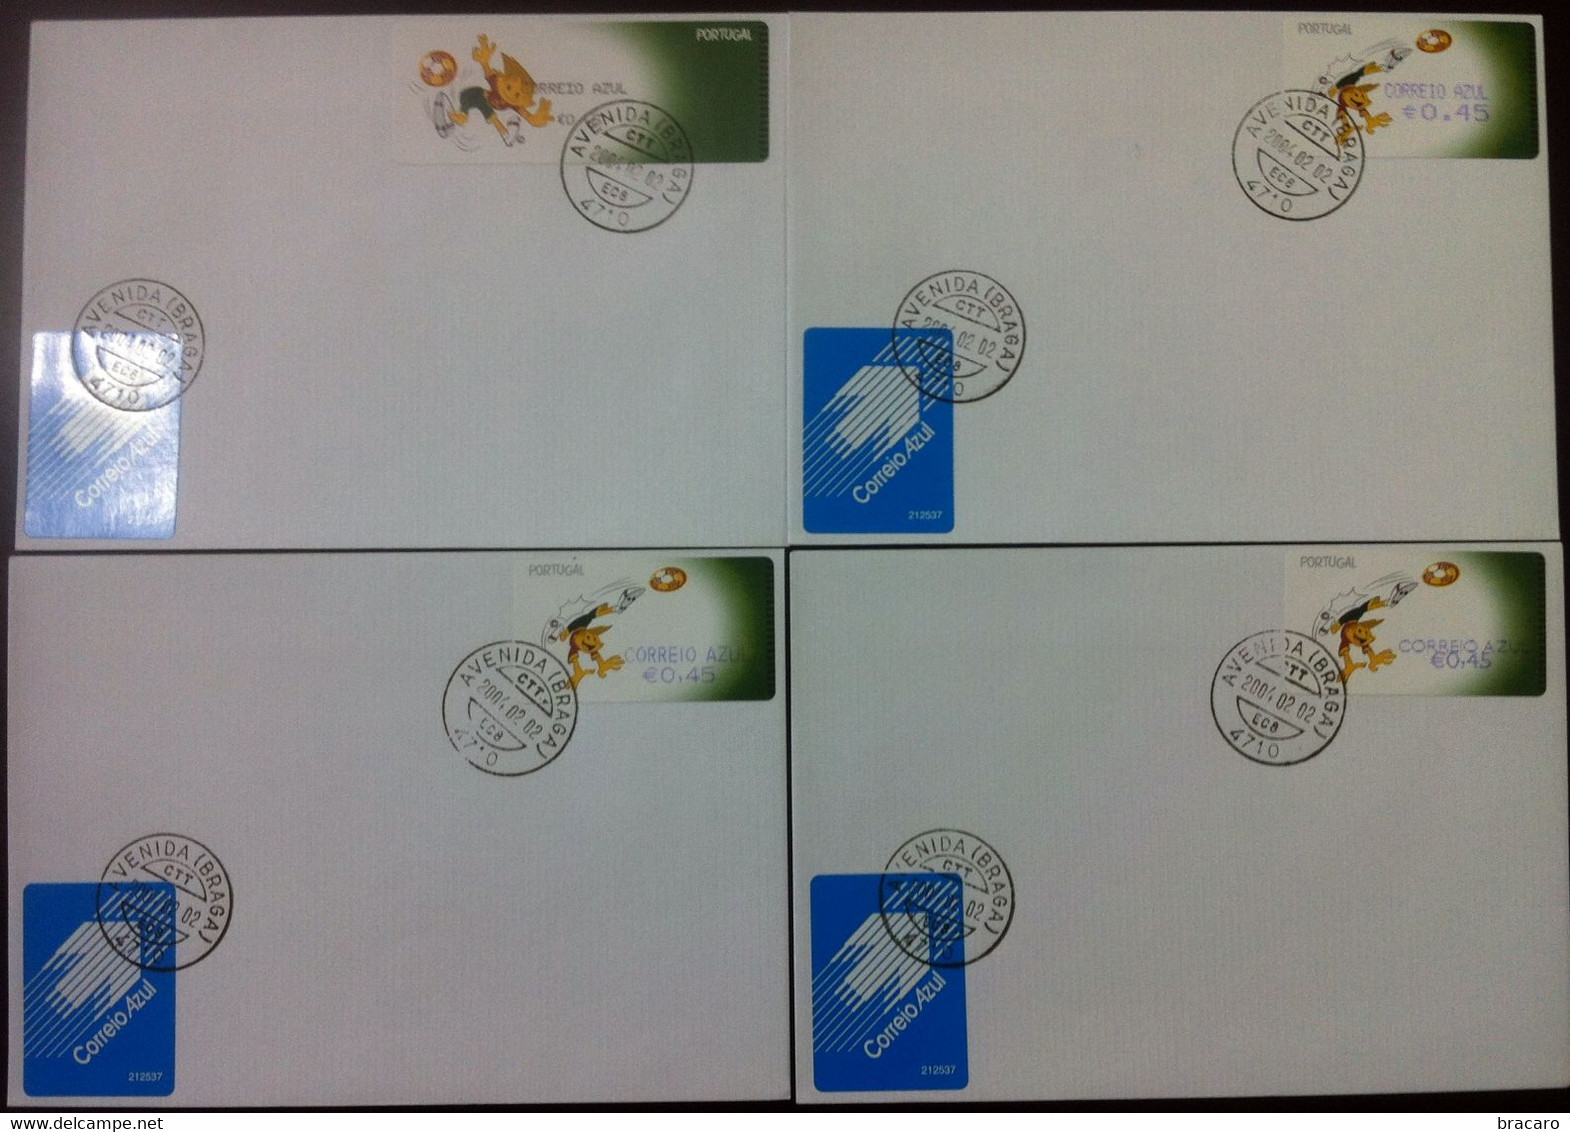 Portugal - ATM Machine Stamps - Cover X 8 - EURO'04 2004 (futebol / Football) - CORREIO AZUL, Cancel Braga - Maschinenstempel (EMA)